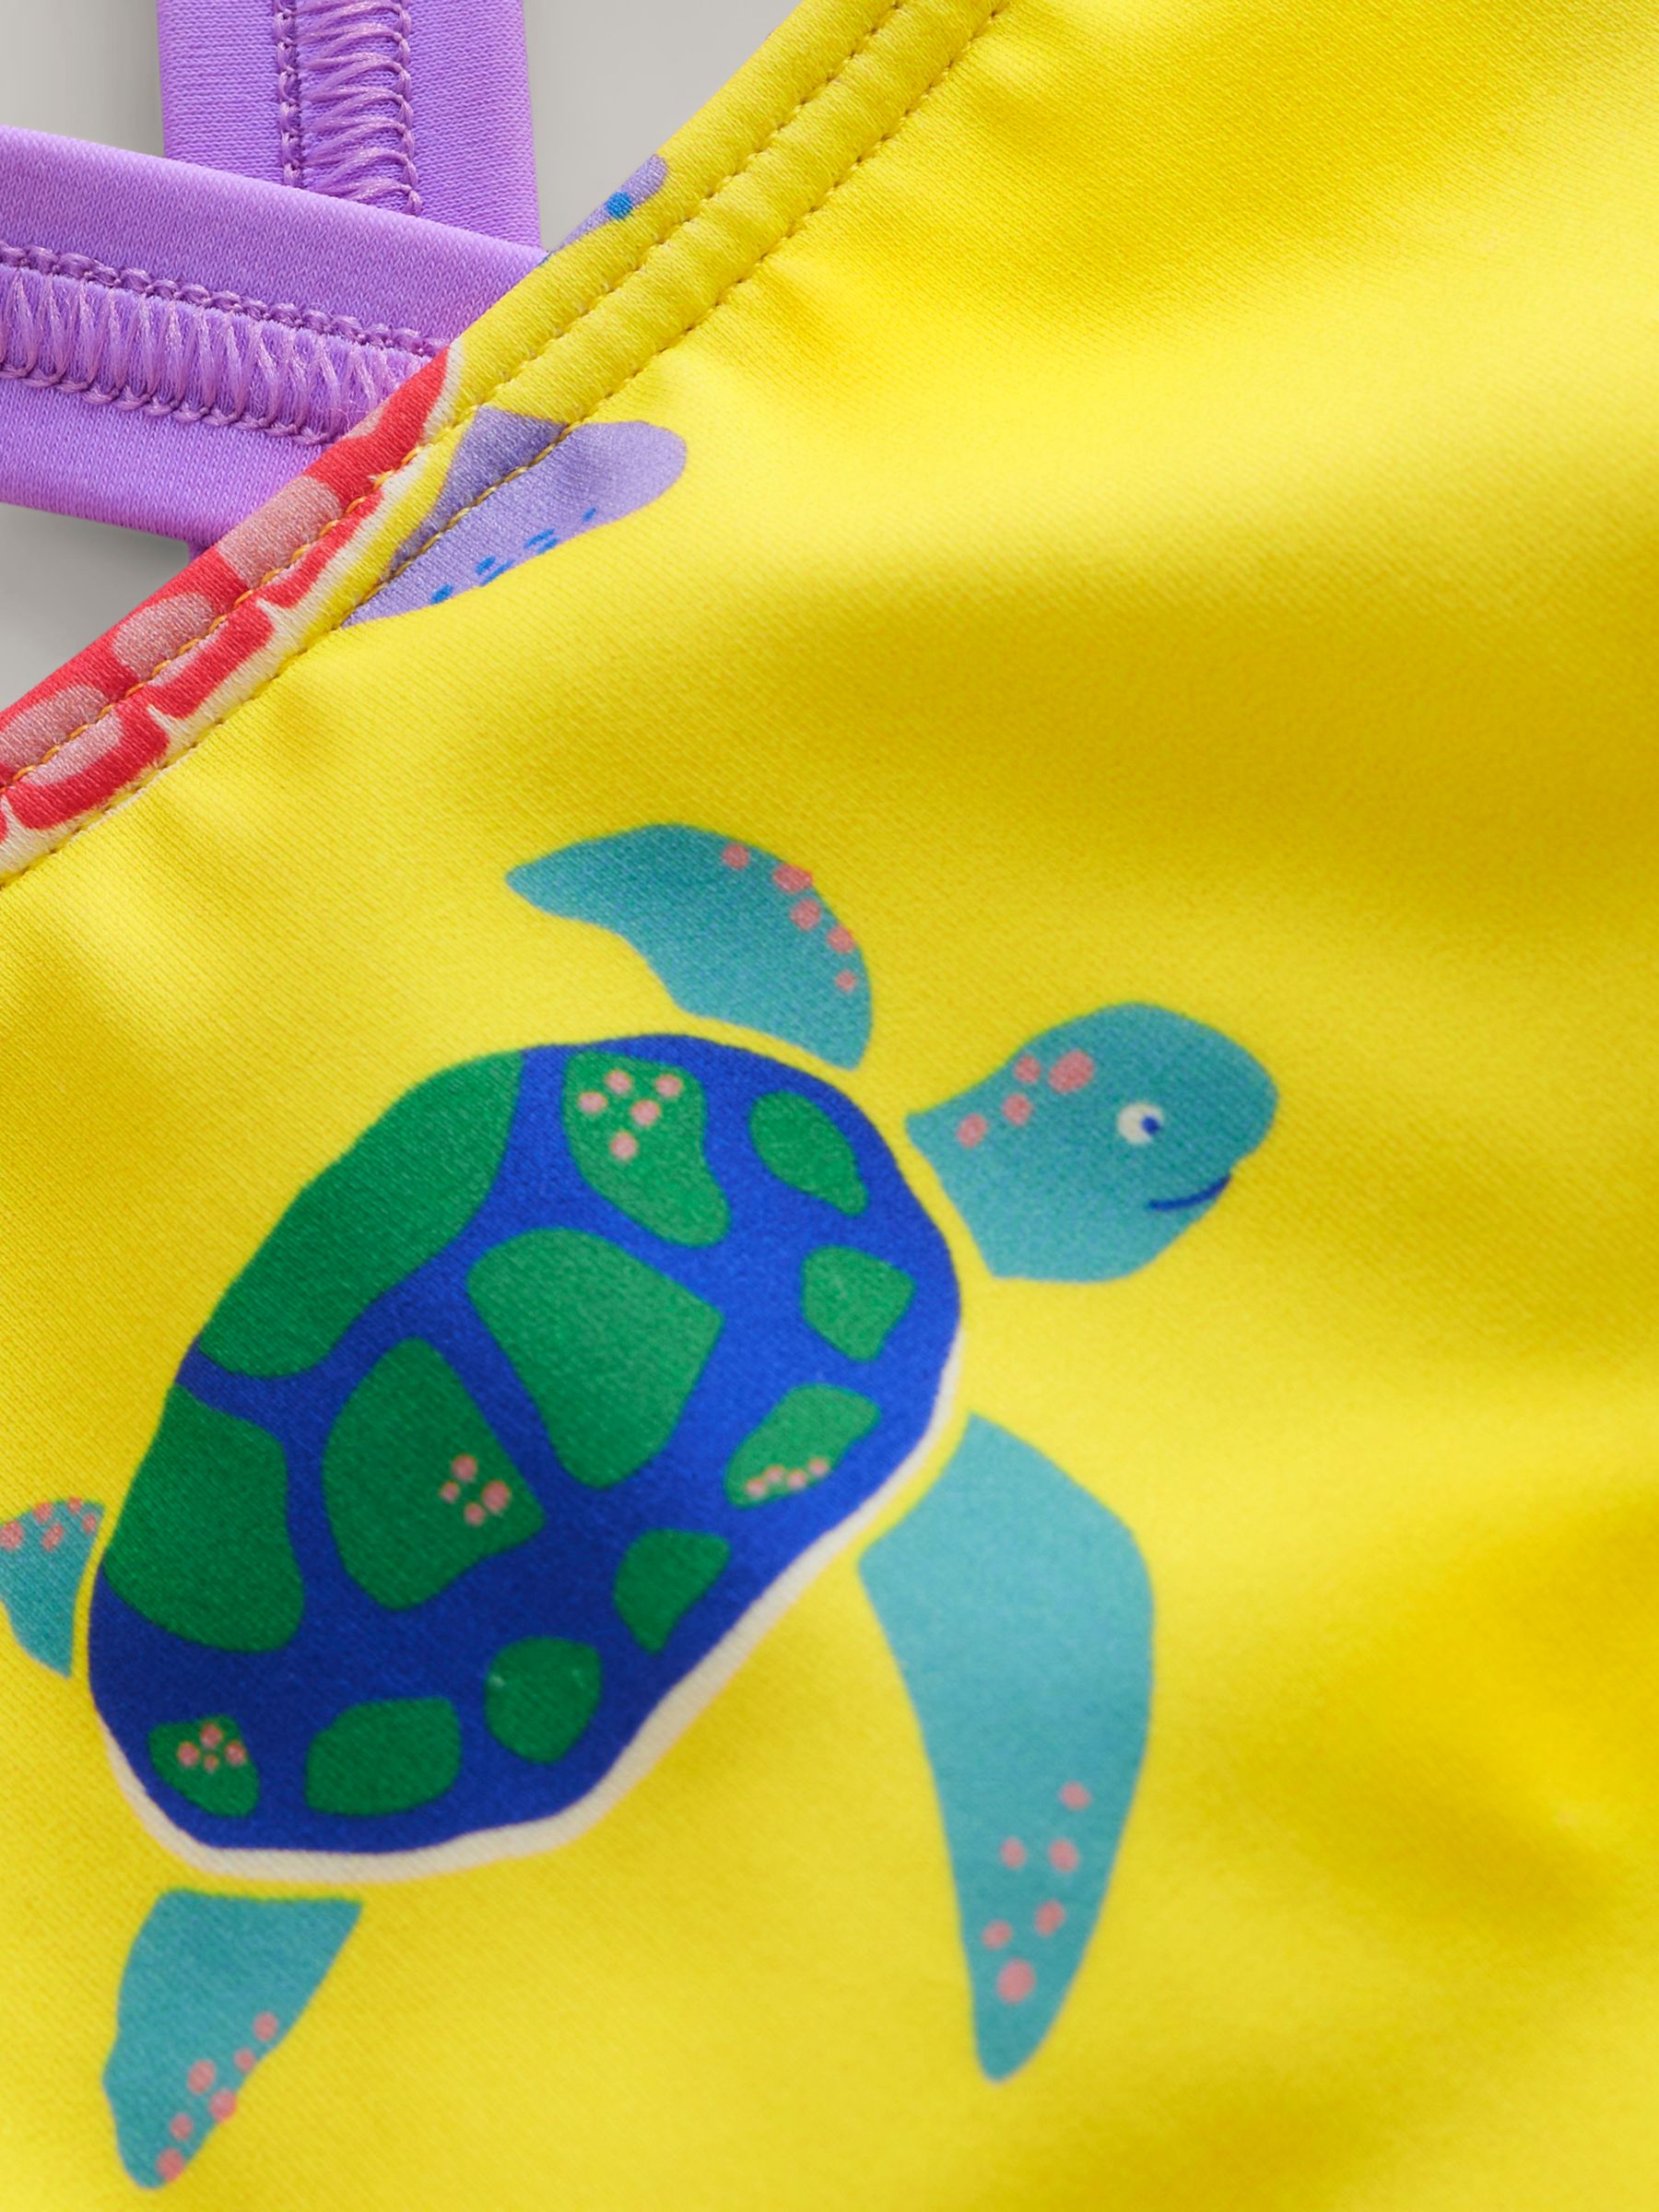 Mini Boden Kids' Turtle Print Cross Back Swimsuit, Zest Yellow, 6-7 years